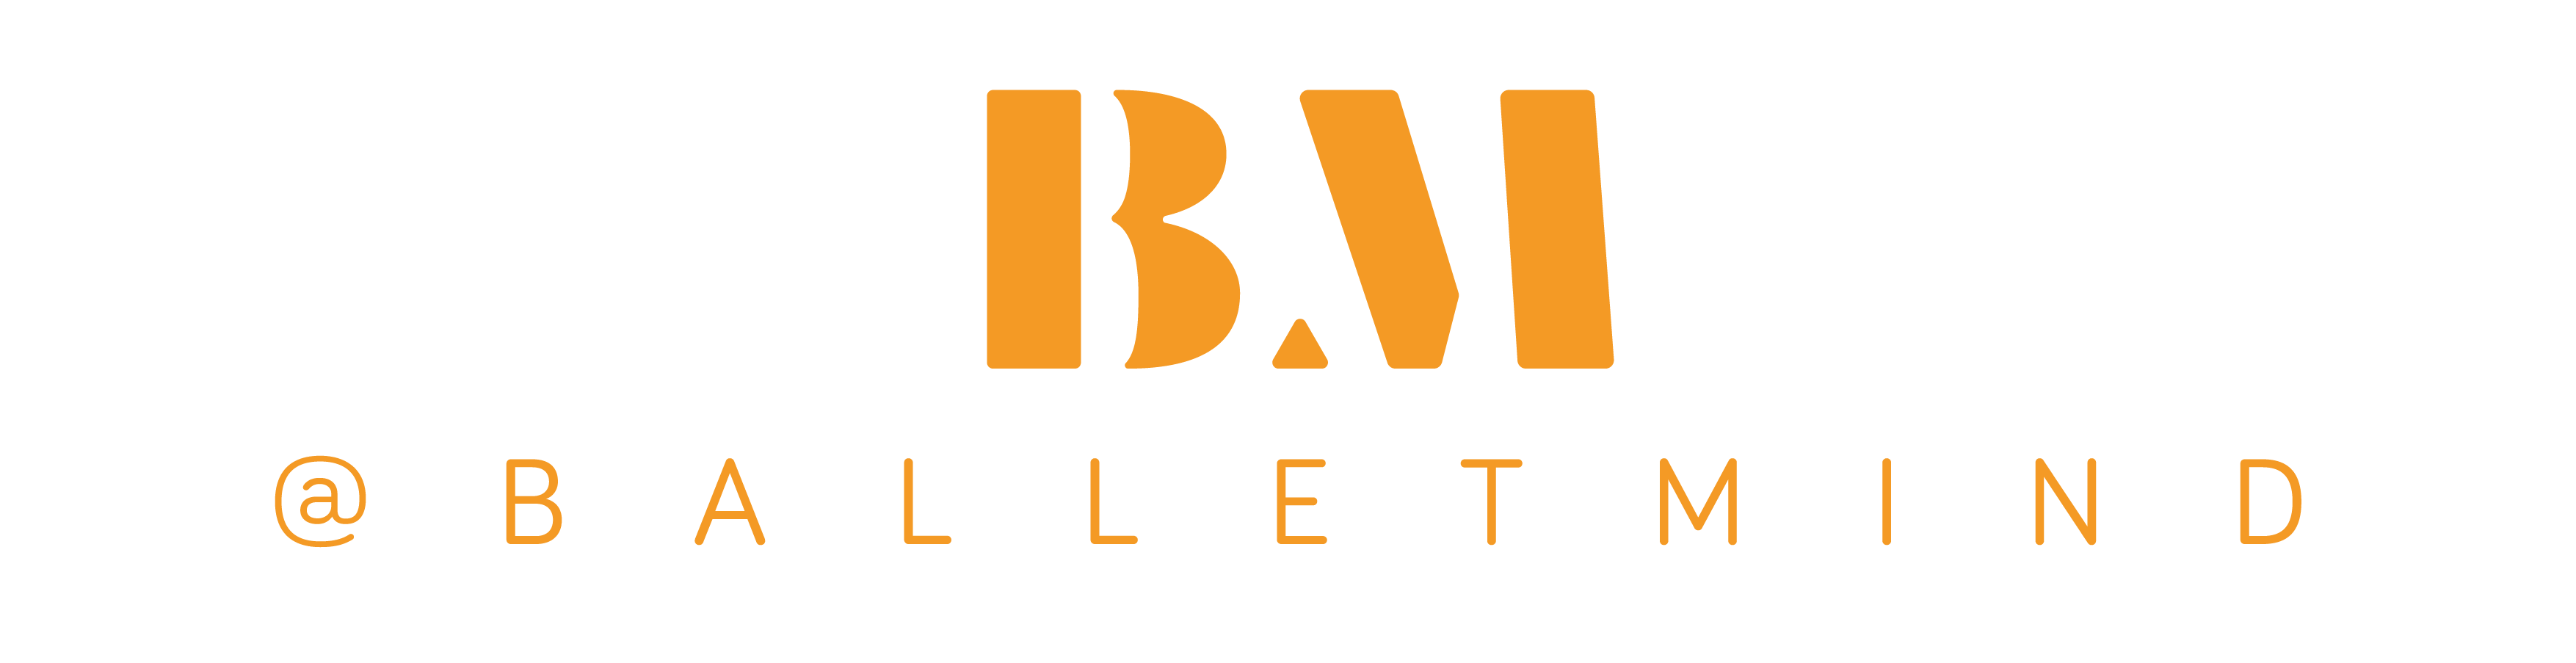 BalletMind_Identitat_Logo_Horitzontal_Corporatiu